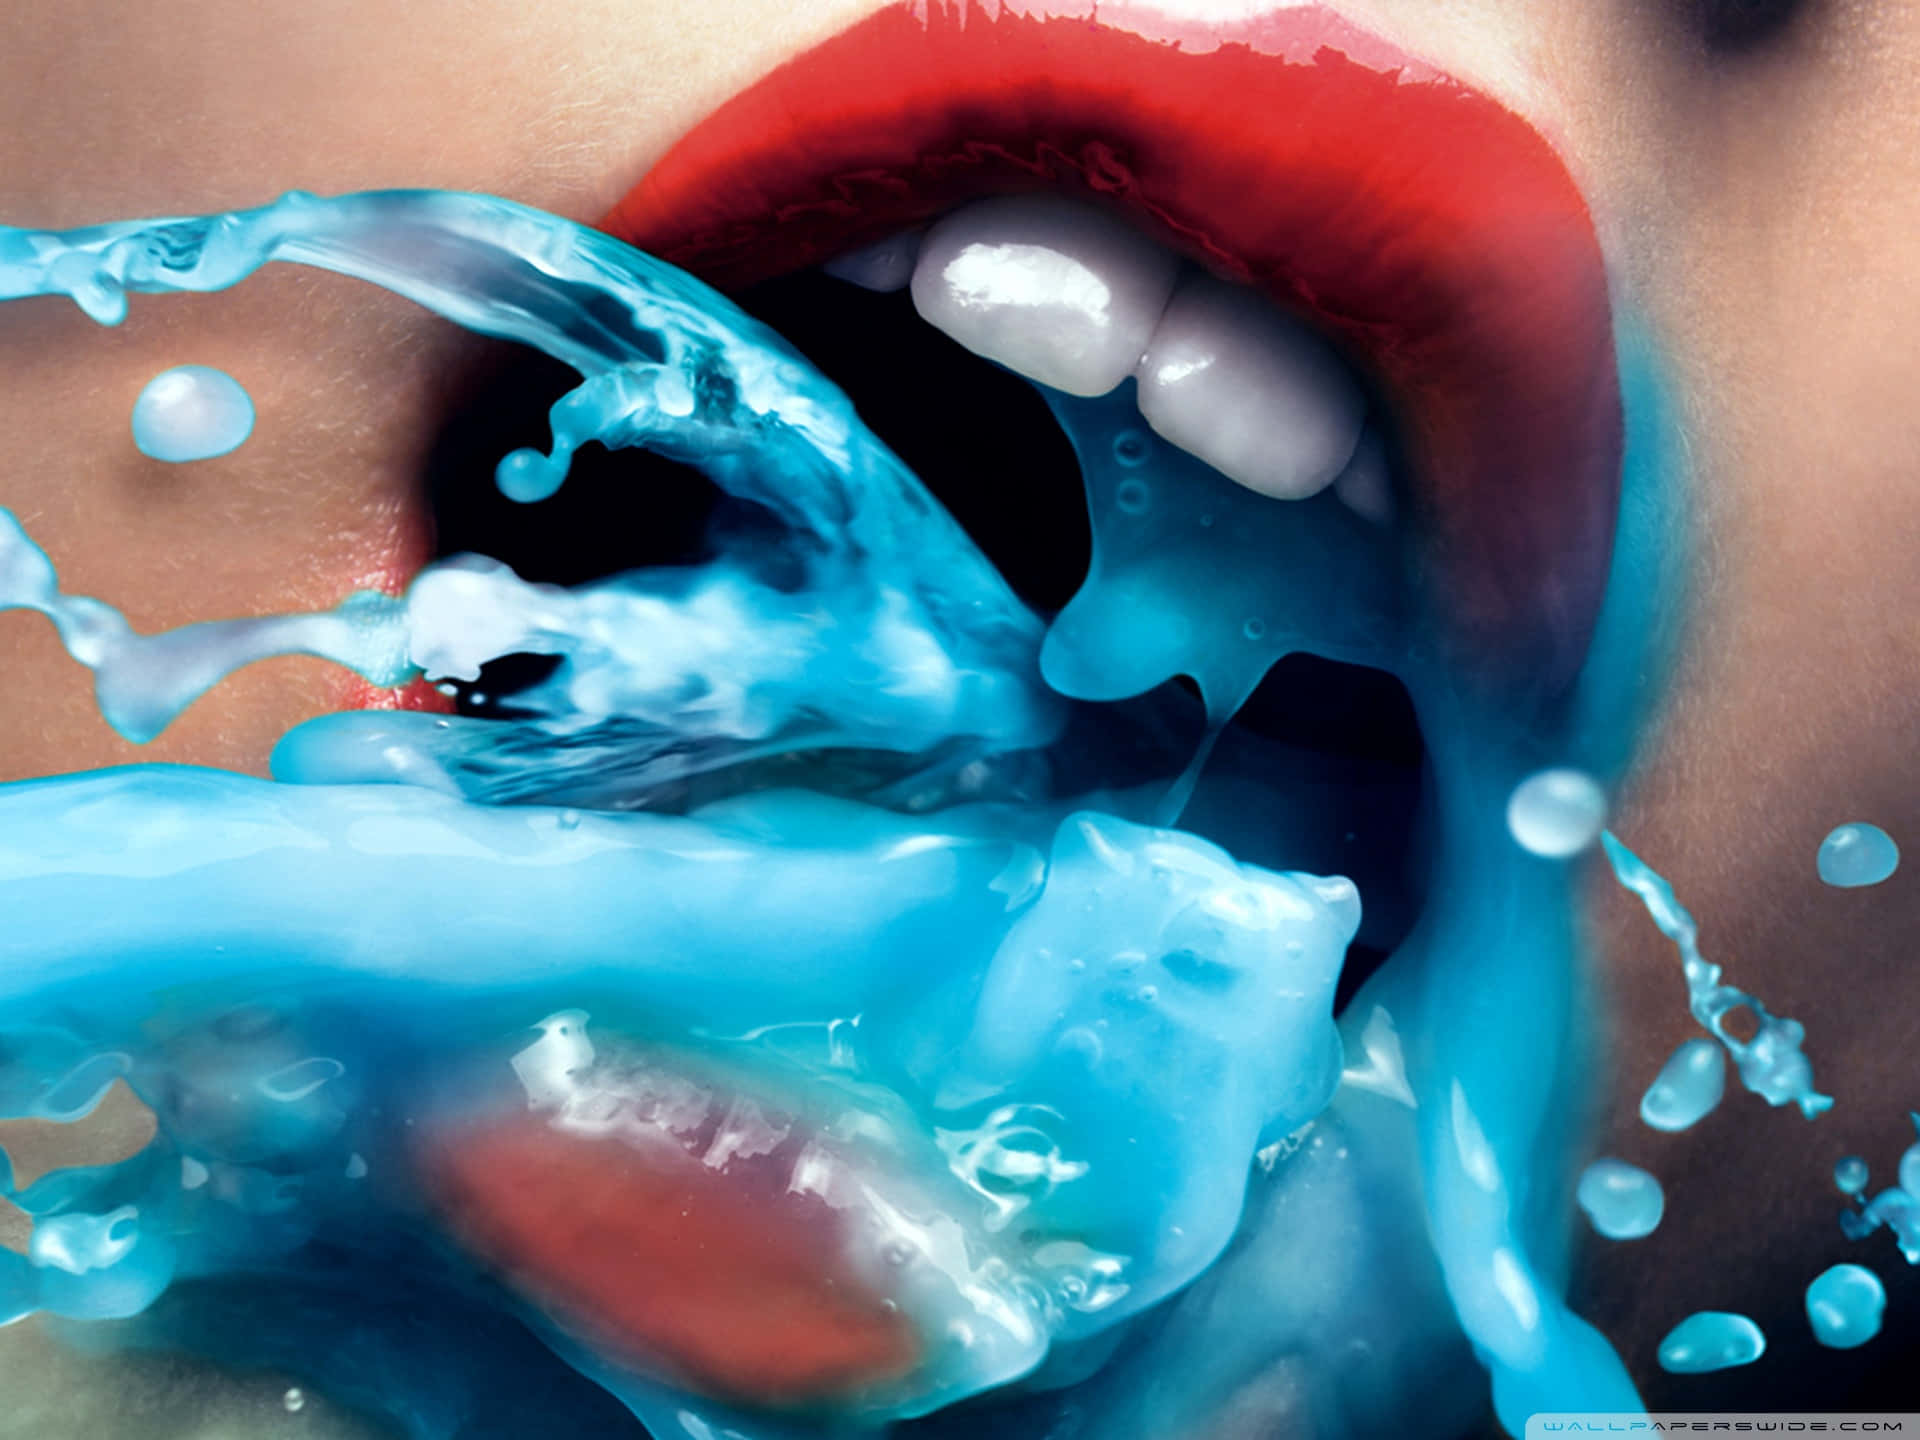 Oral Mouthwash Image Wallpaper